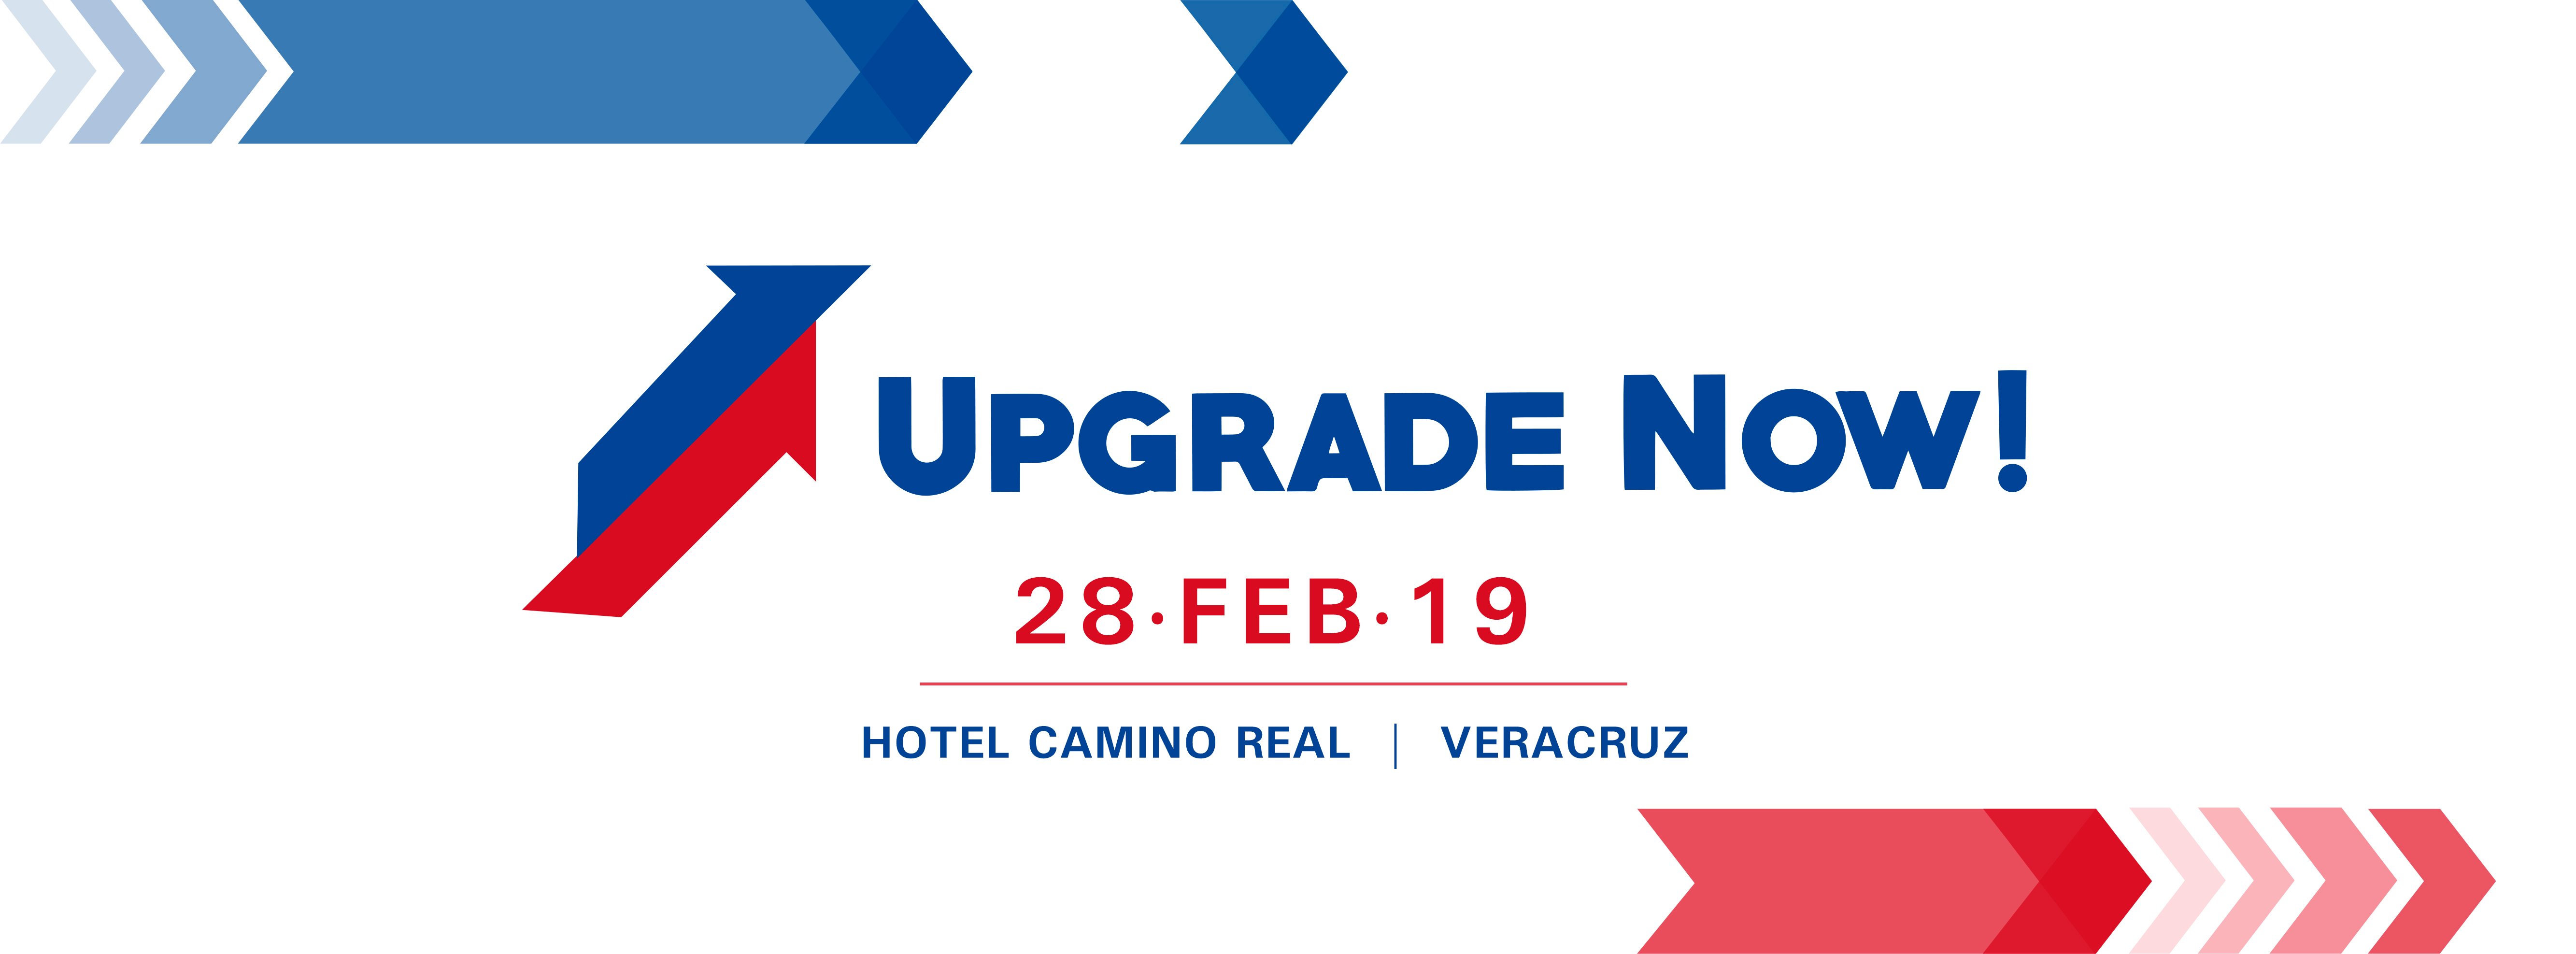 upgrade-now-veracruz-formulario